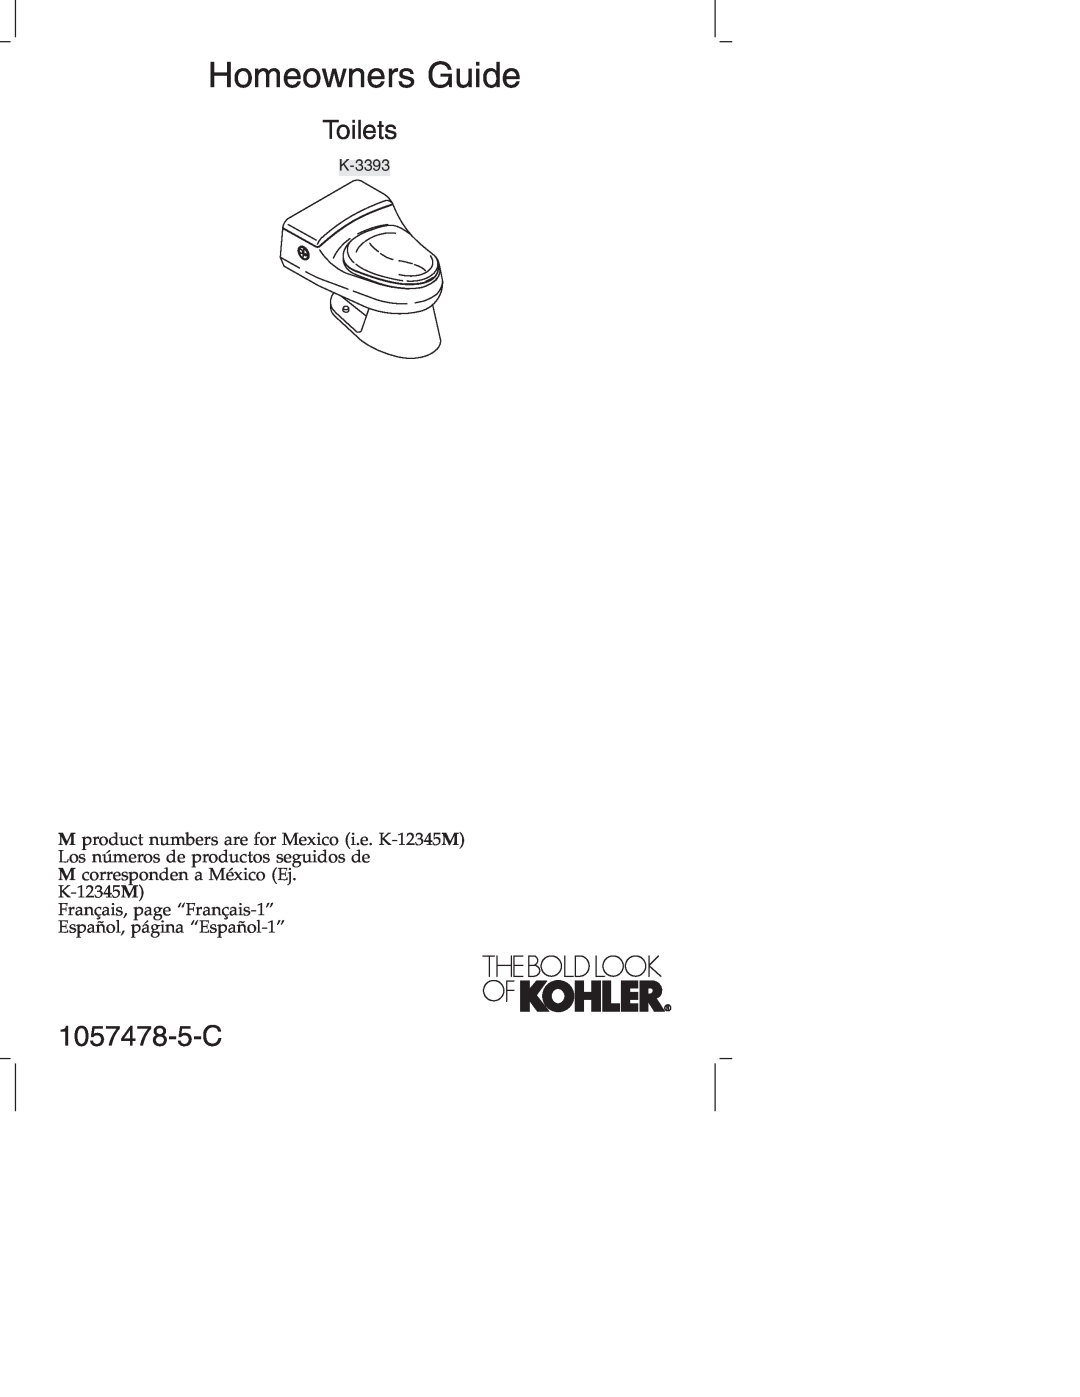 Kohler K-3393 manual 1057478-5-C, Homeowners Guide, Toilets 